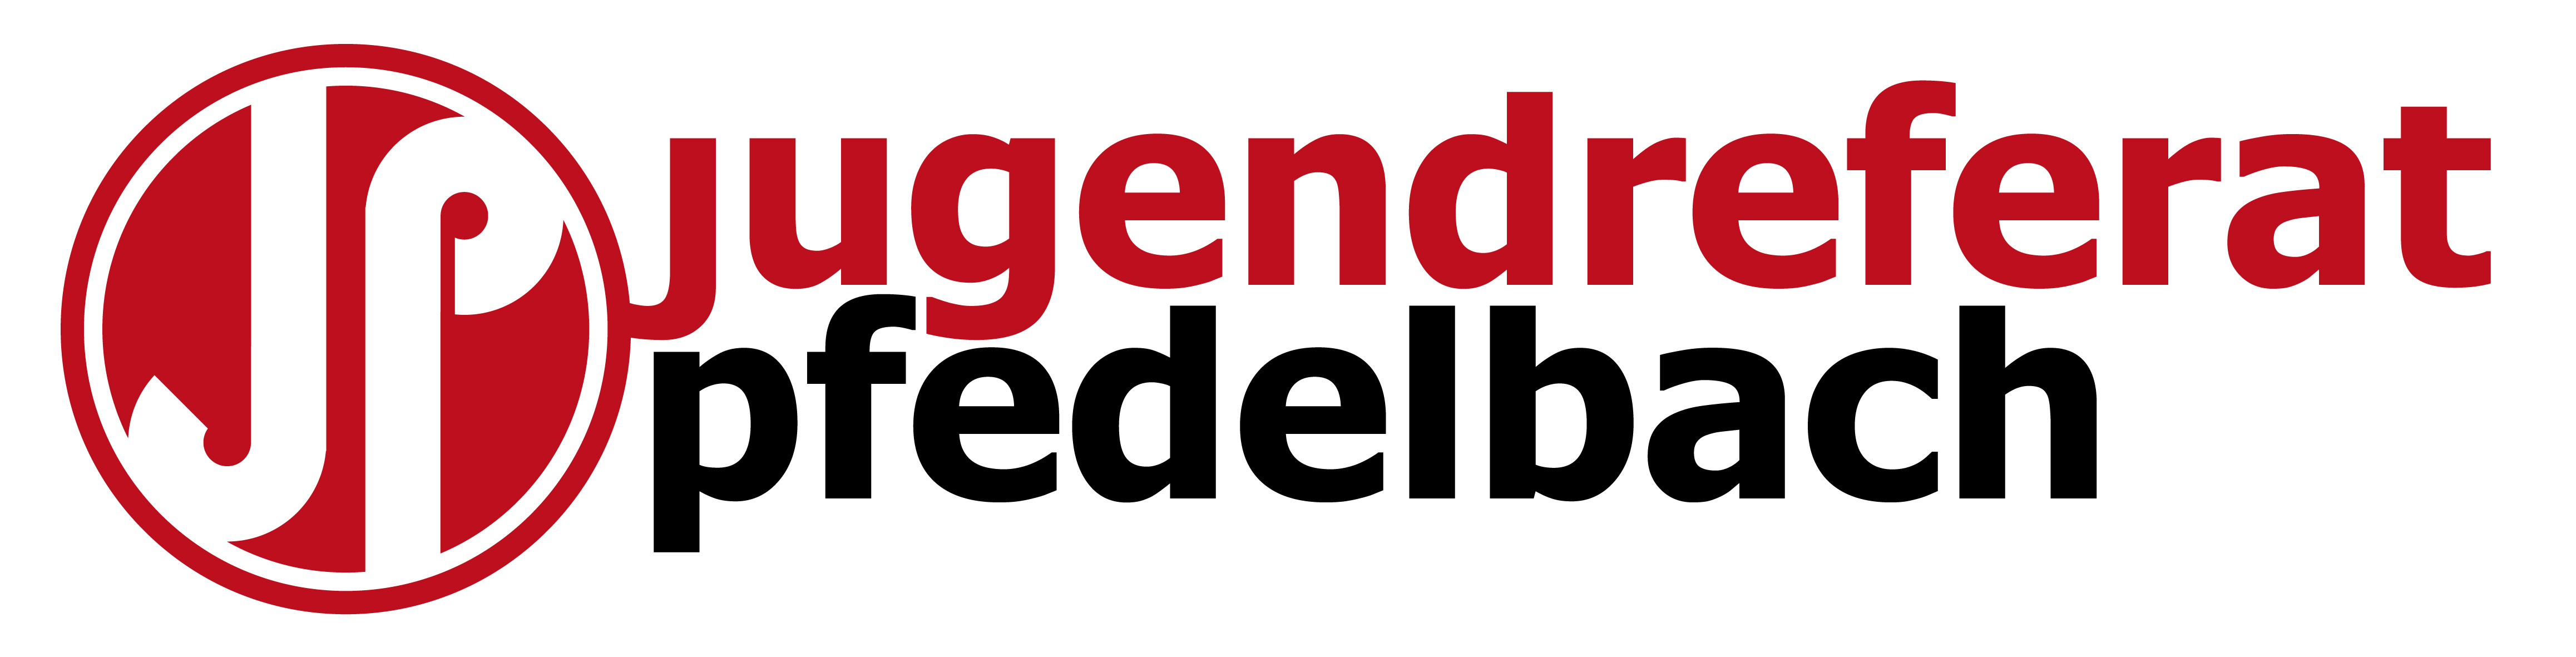                                                     Logo: Jugendreferat Pfedelbach                                    